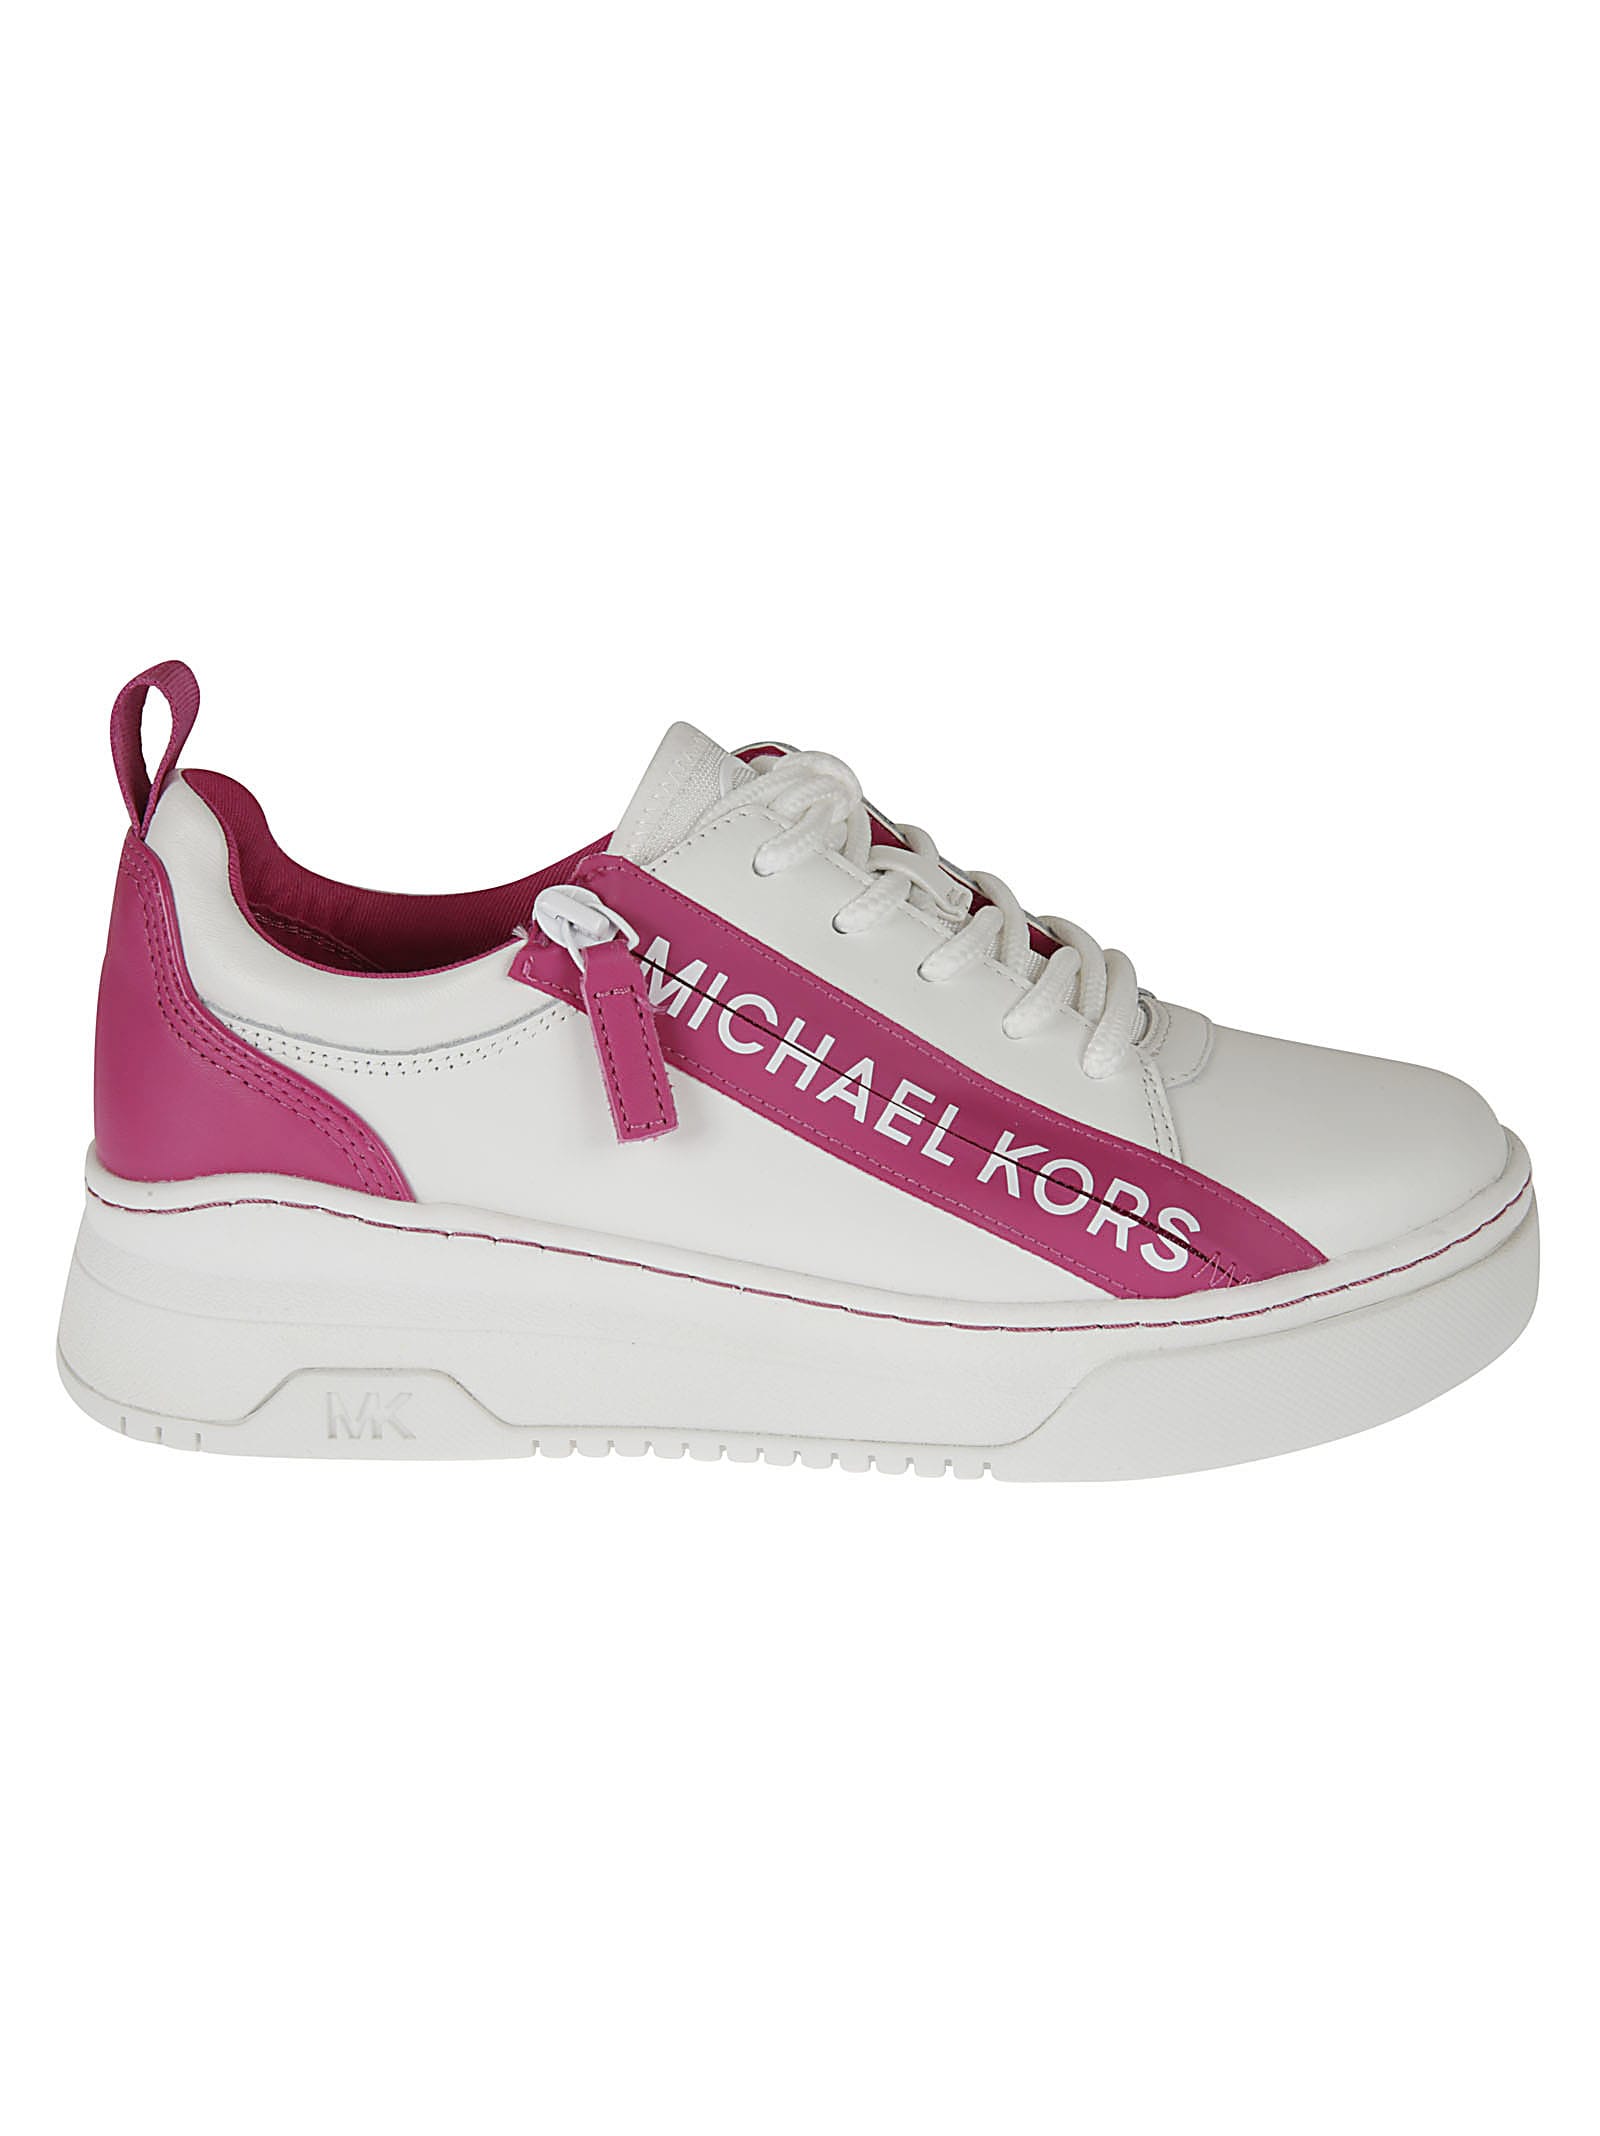 Michael Kors Alex Sneakers